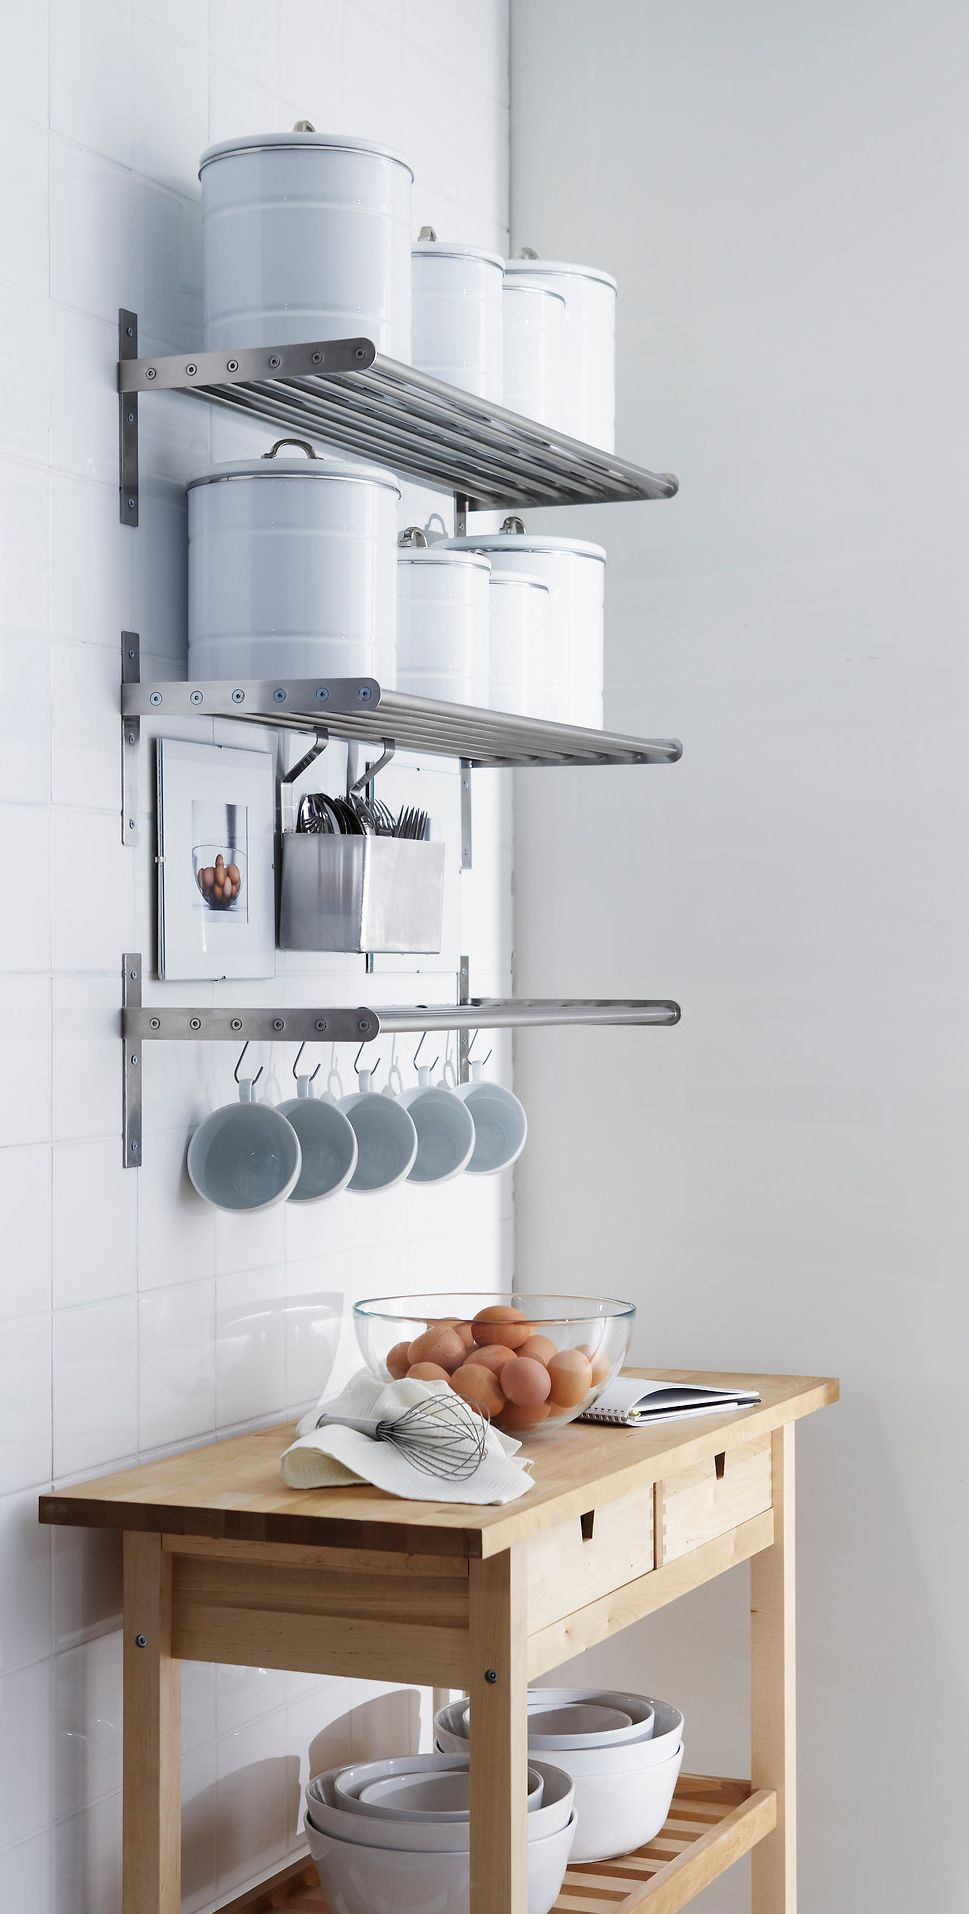 Best ideas about Ikea Kitchen Storage Ideas
. Save or Pin 65 Ingenious Kitchen Organization Tips And Storage Ideas Now.